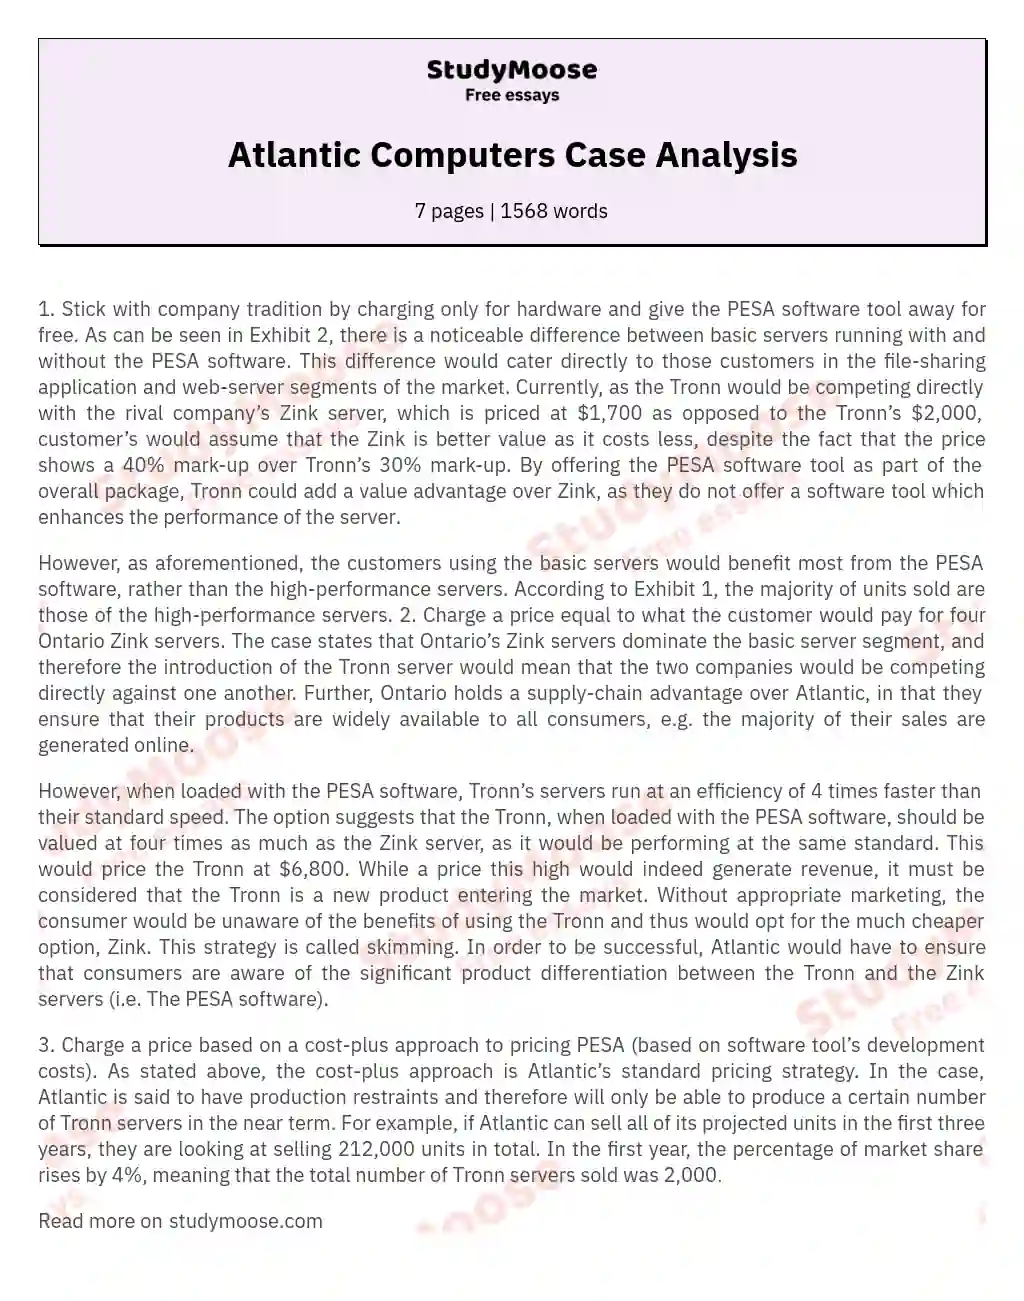 Atlantic Computers Case Analysis essay